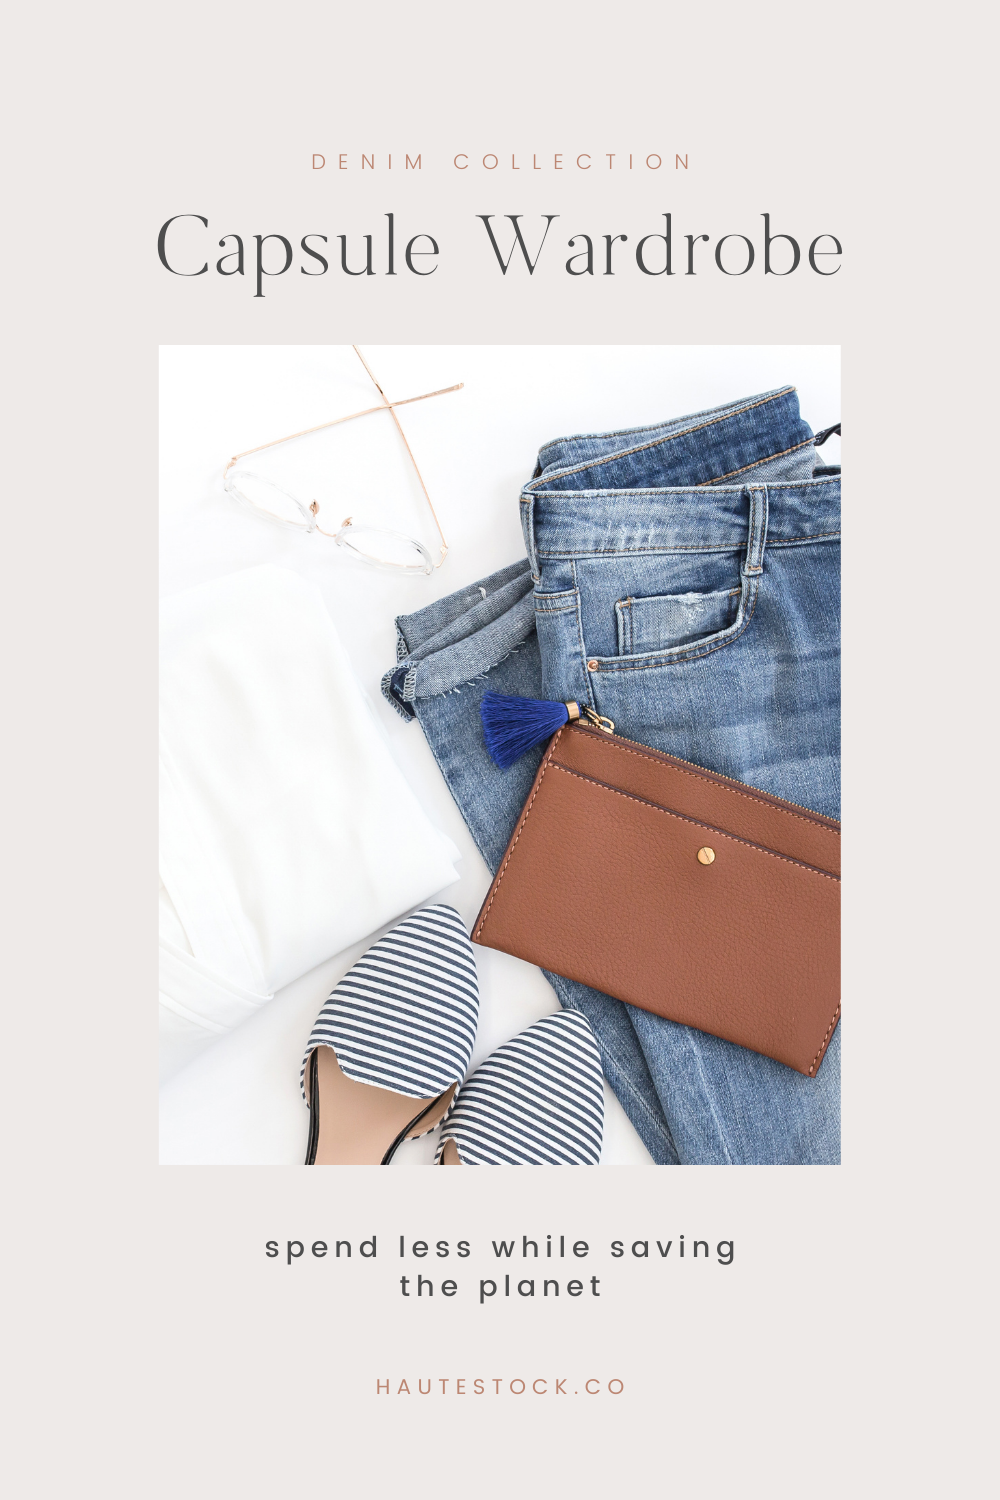 Capsule wardrobe stock photos from Haute Stock. Beauty stock images. Fashion stock photos. Clothing stock images from Haute Stock.